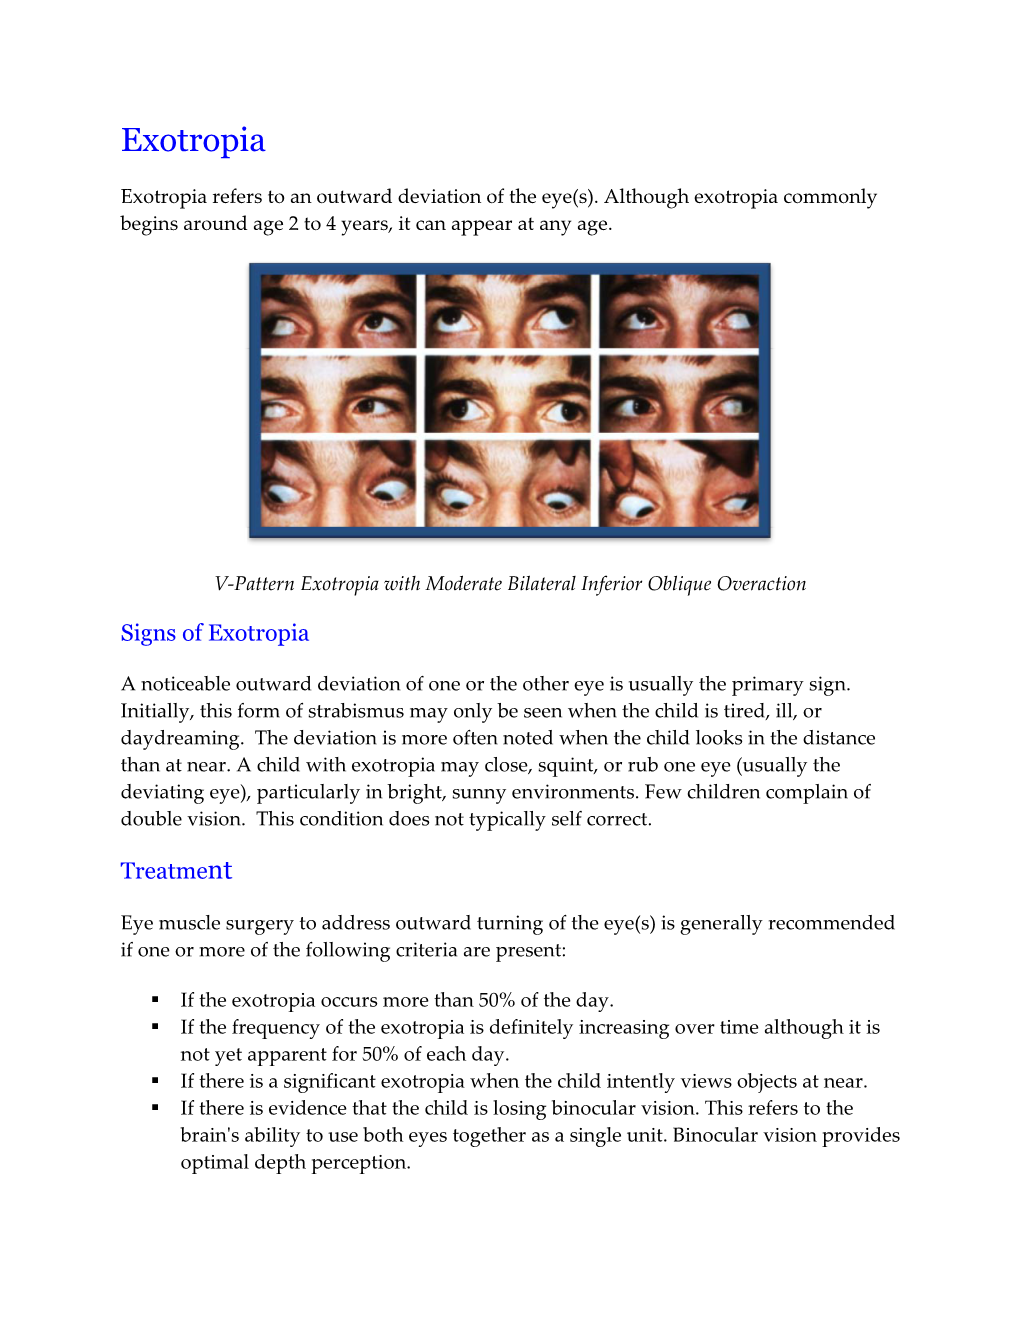 Exotropia (Outward Turning of Eye(S))